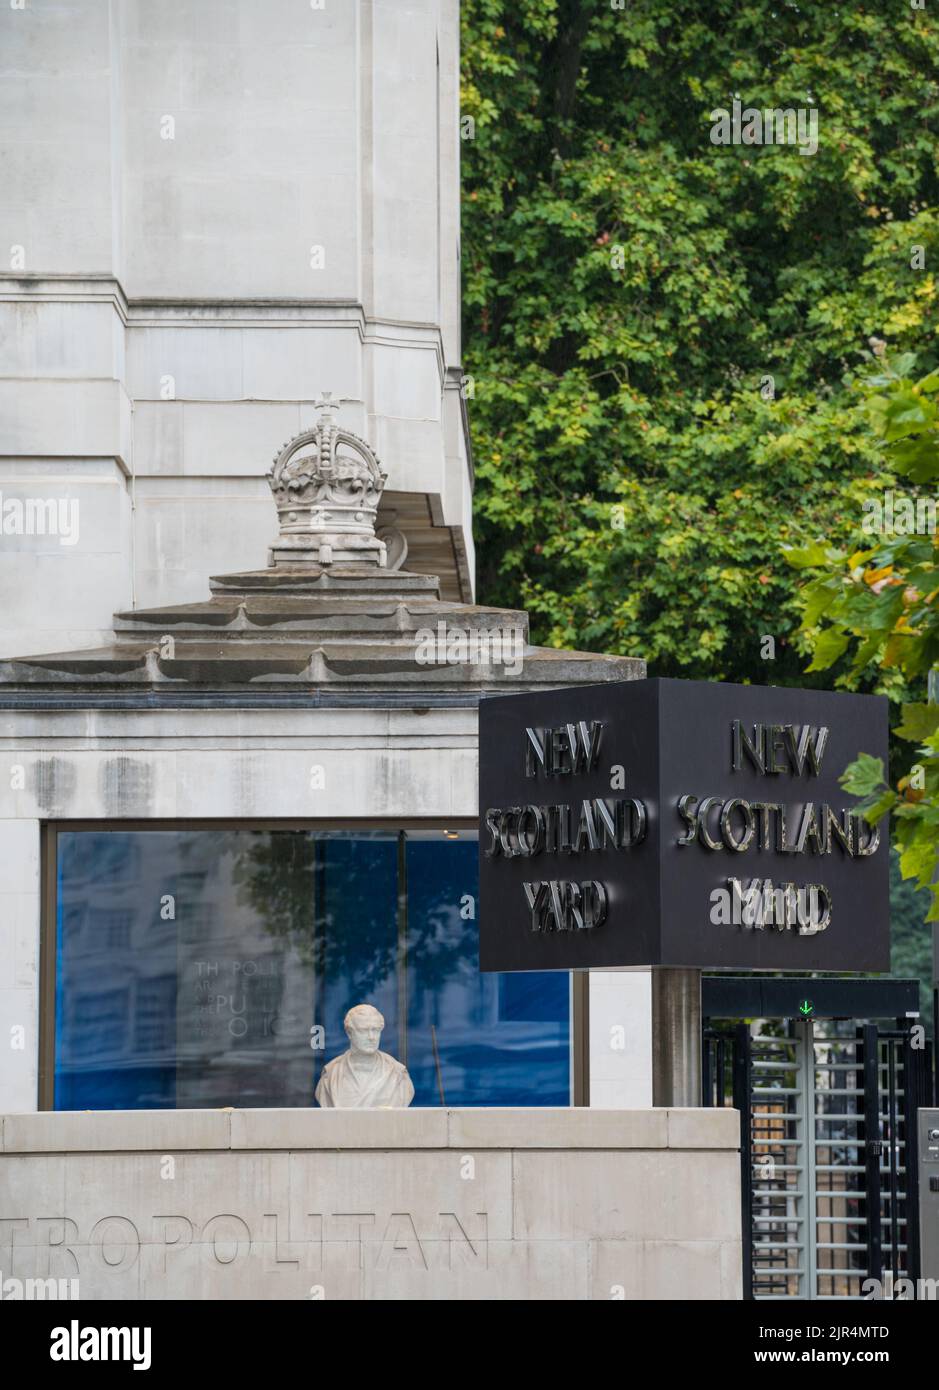 New Scotland Yard revolving name sign outside the Metropolitan Police headquarters on Victoria Embankment, Westminster, London, England, UK Stock Photo